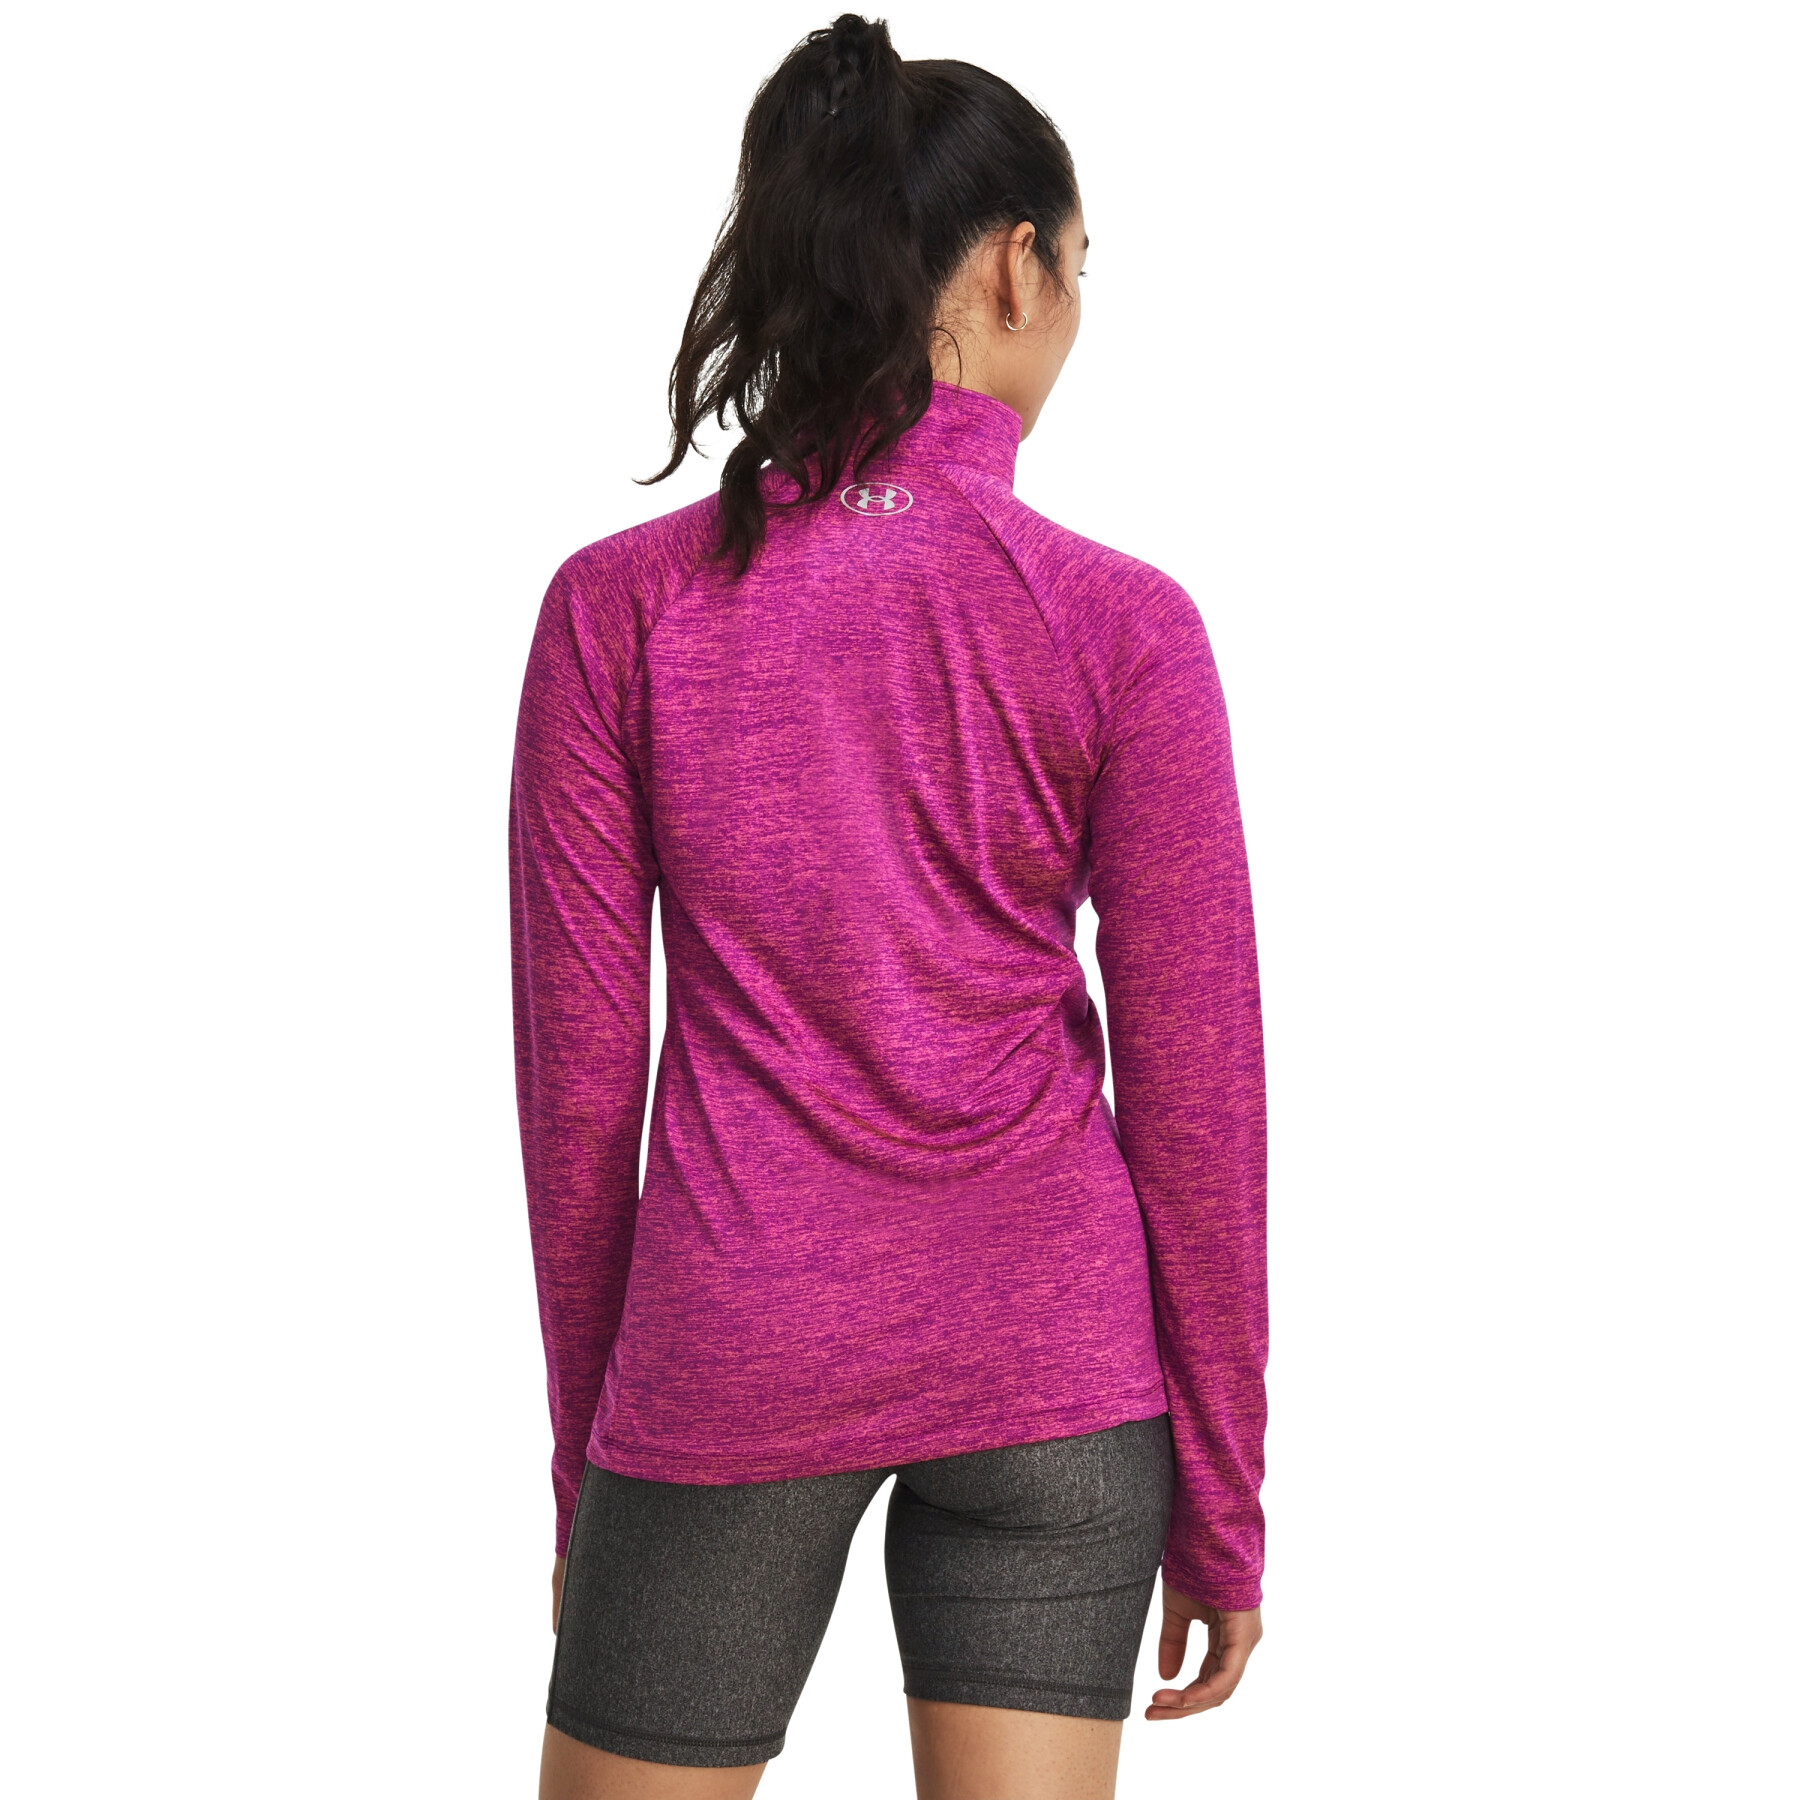 Women's 1/2 zip long sleeve jersey Under Armour Tech Twist